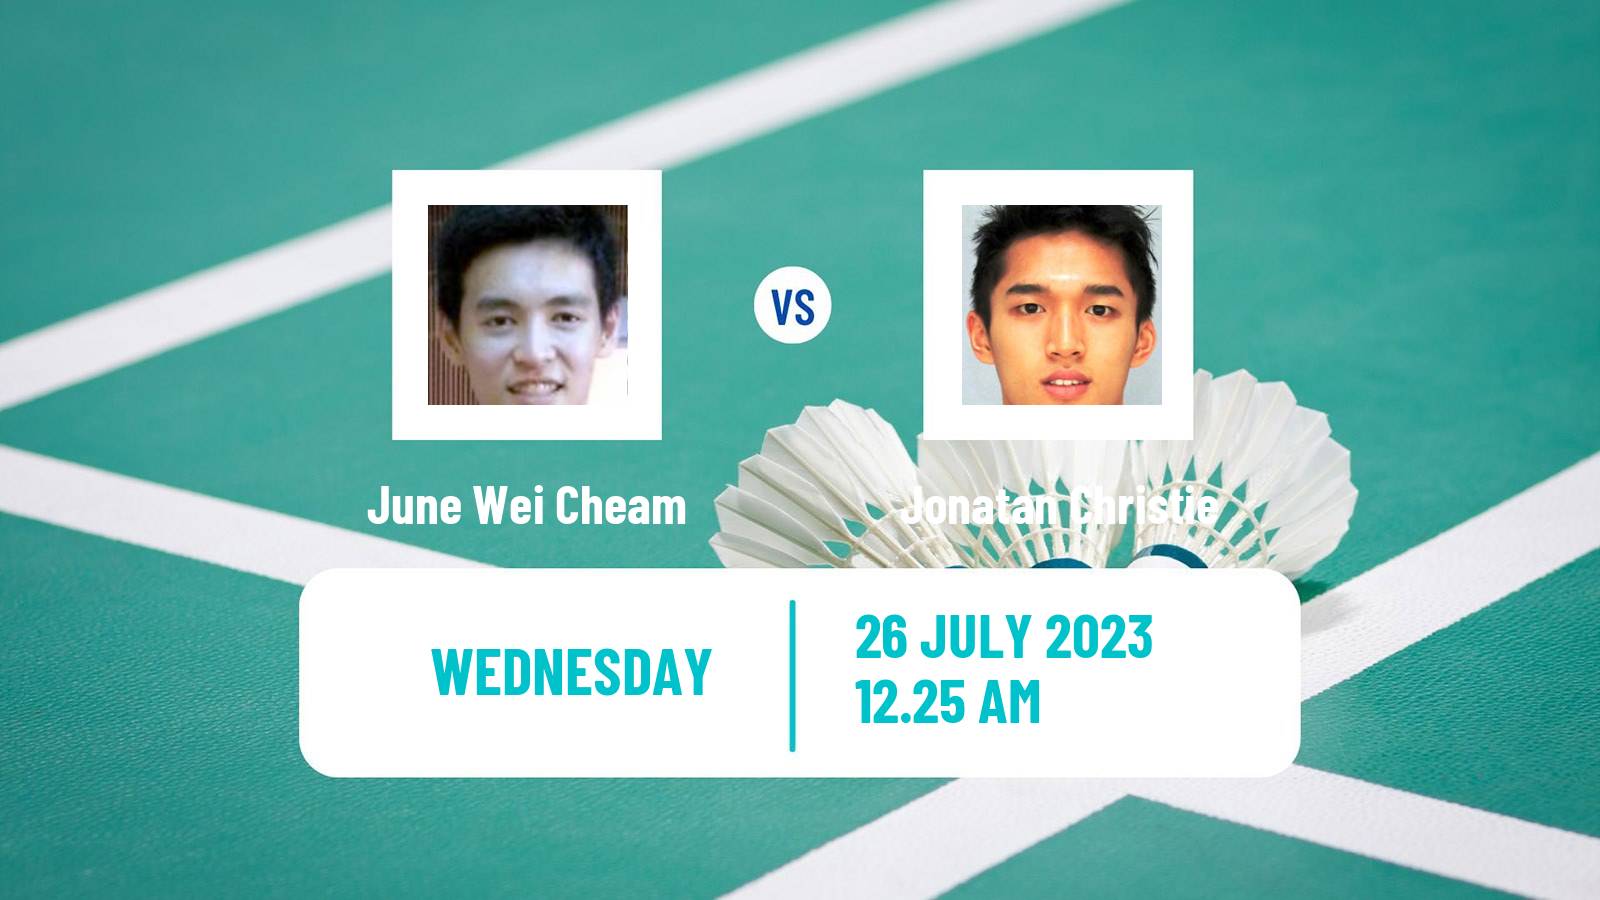 Badminton BWF World Tour Japan Open Men 2023 June Wei Cheam - Jonatan Christie